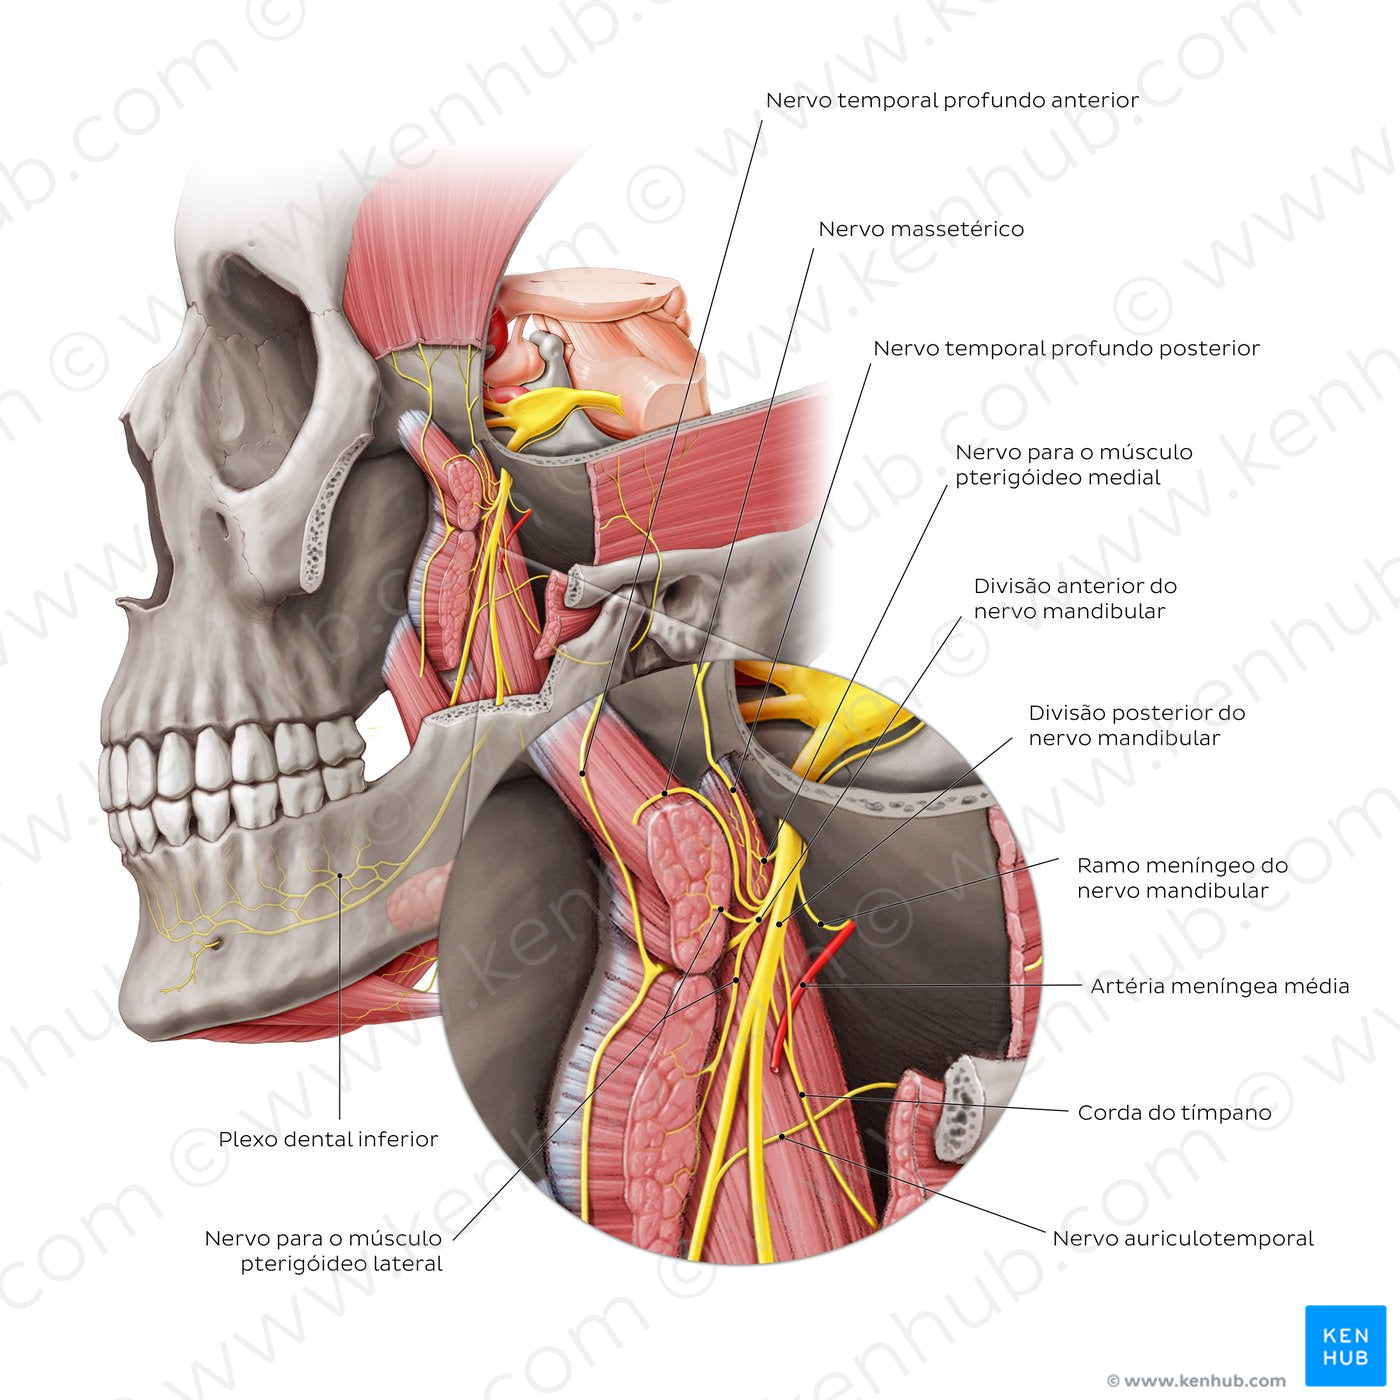 Mandibular nerve (zoomed in) (Portuguese)